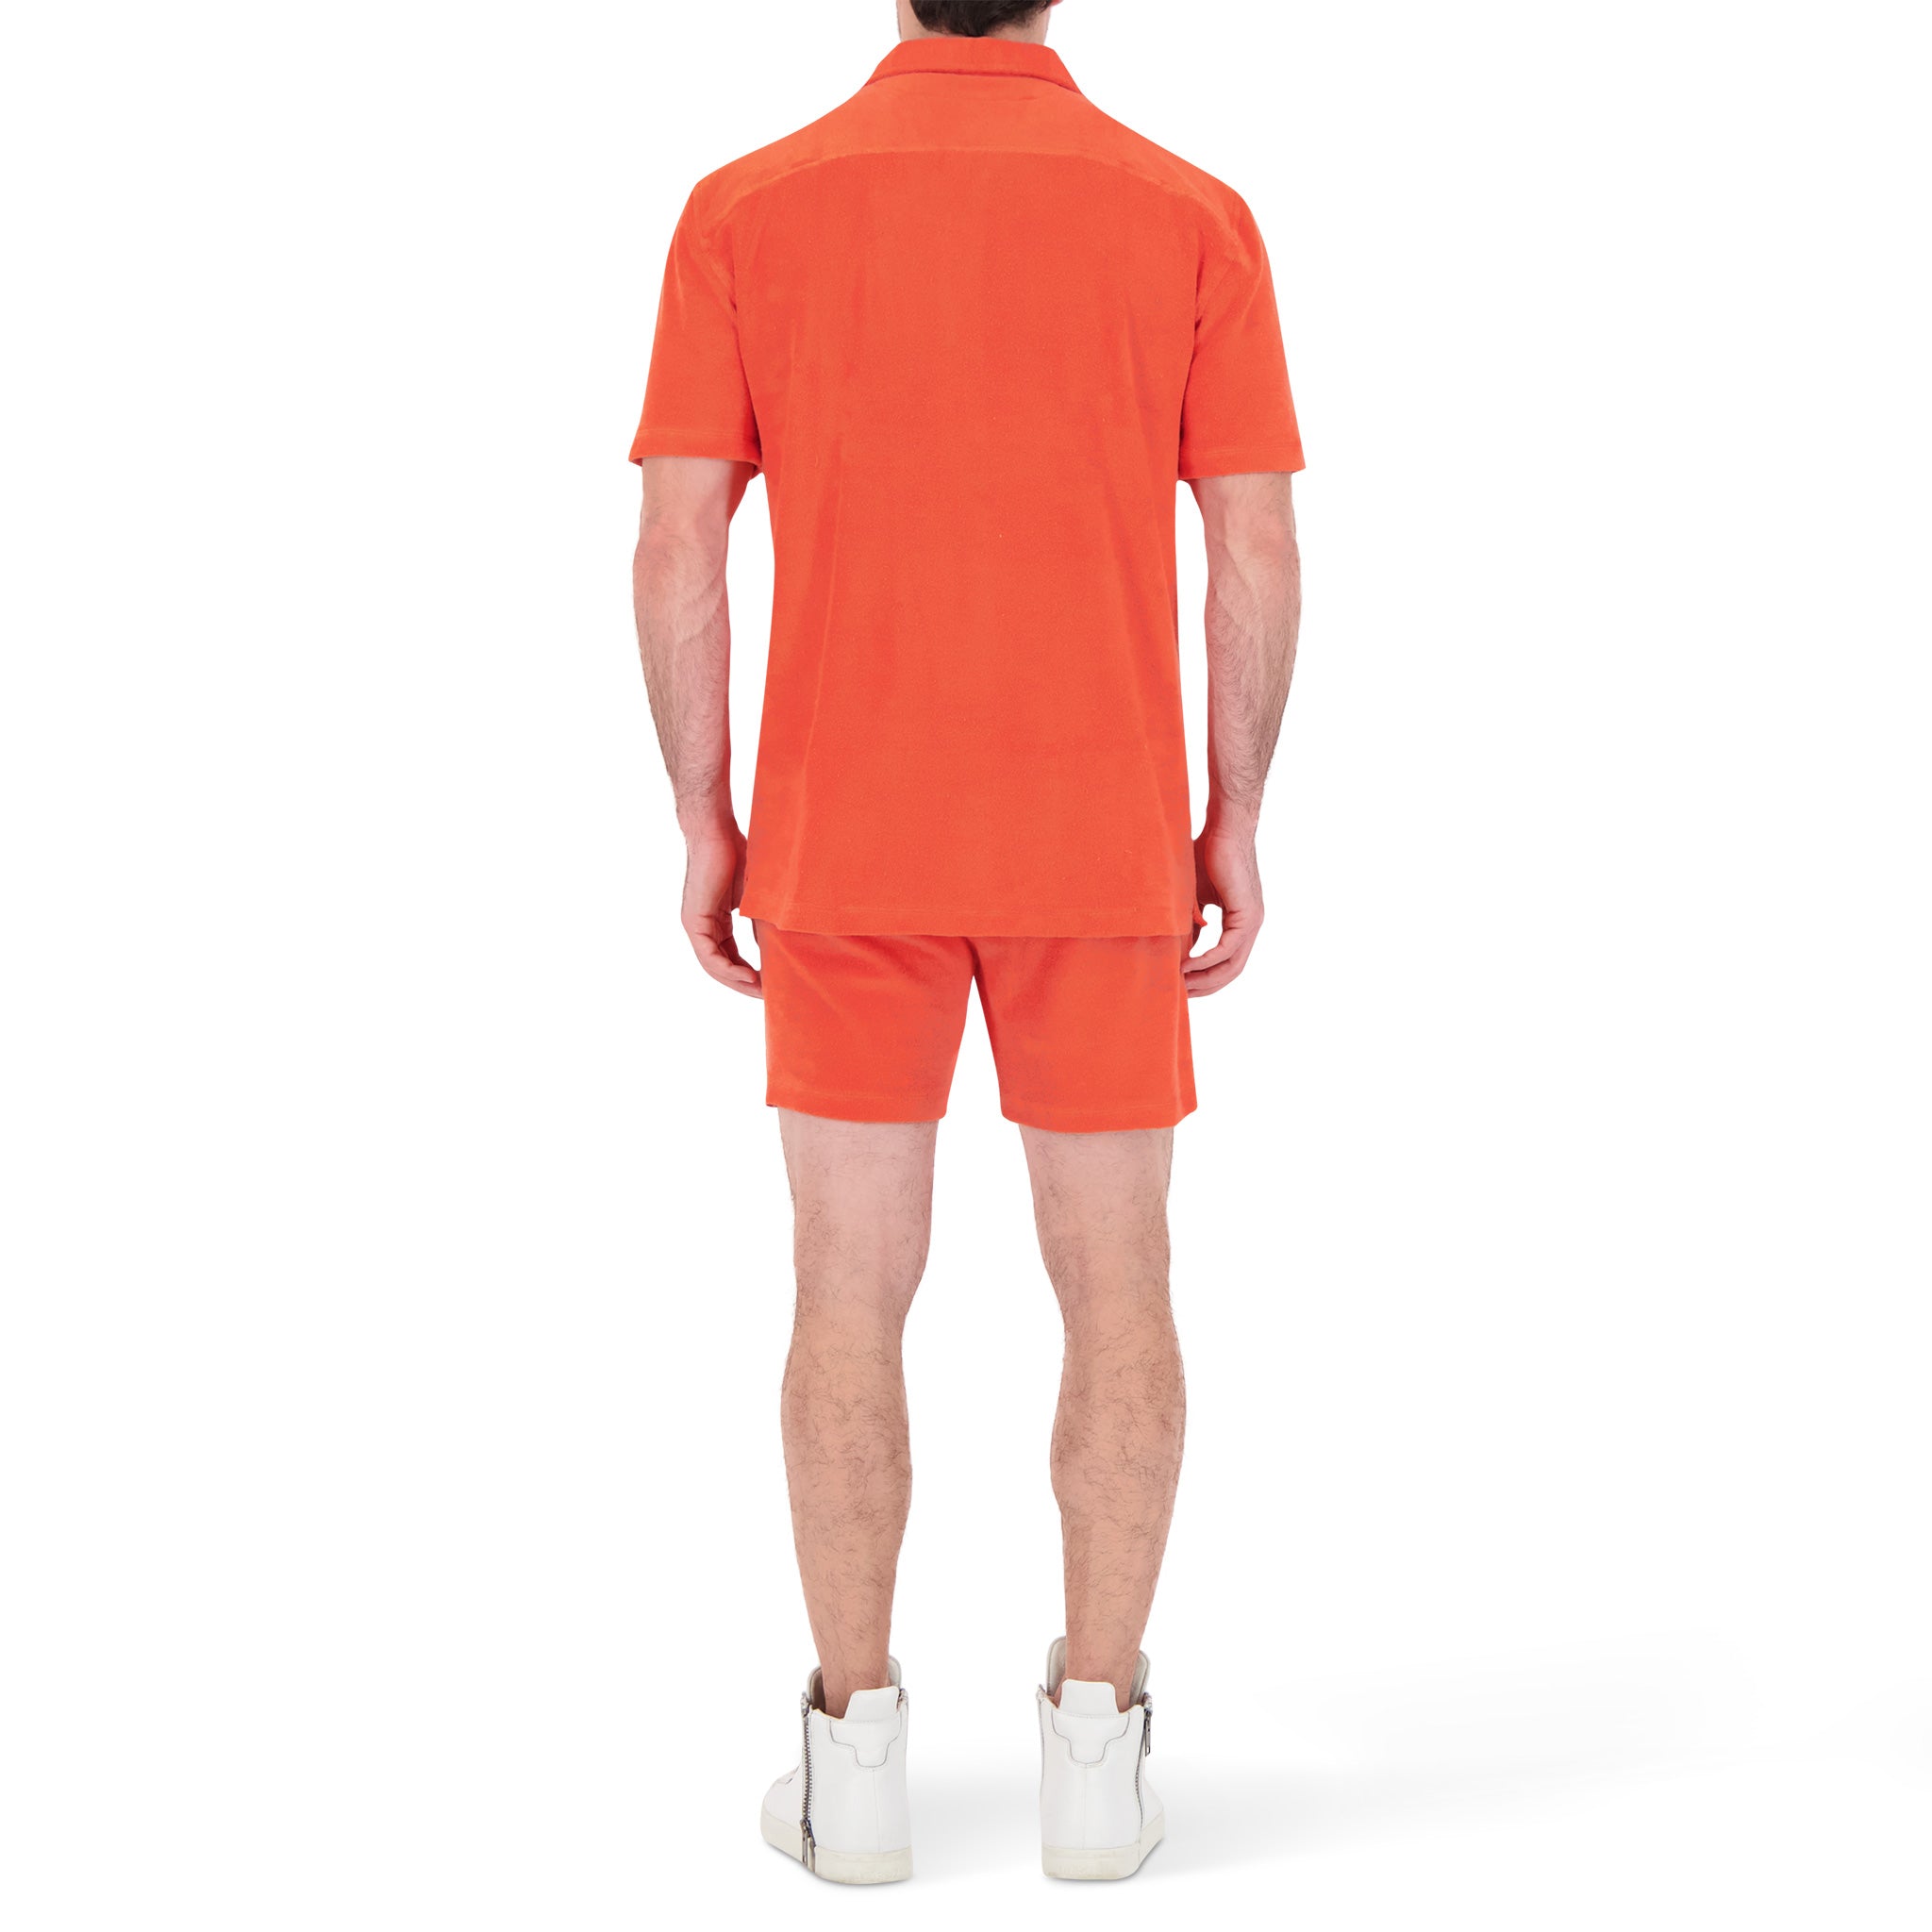 Terry Cloth Camp Shirt in Carnelian Orange